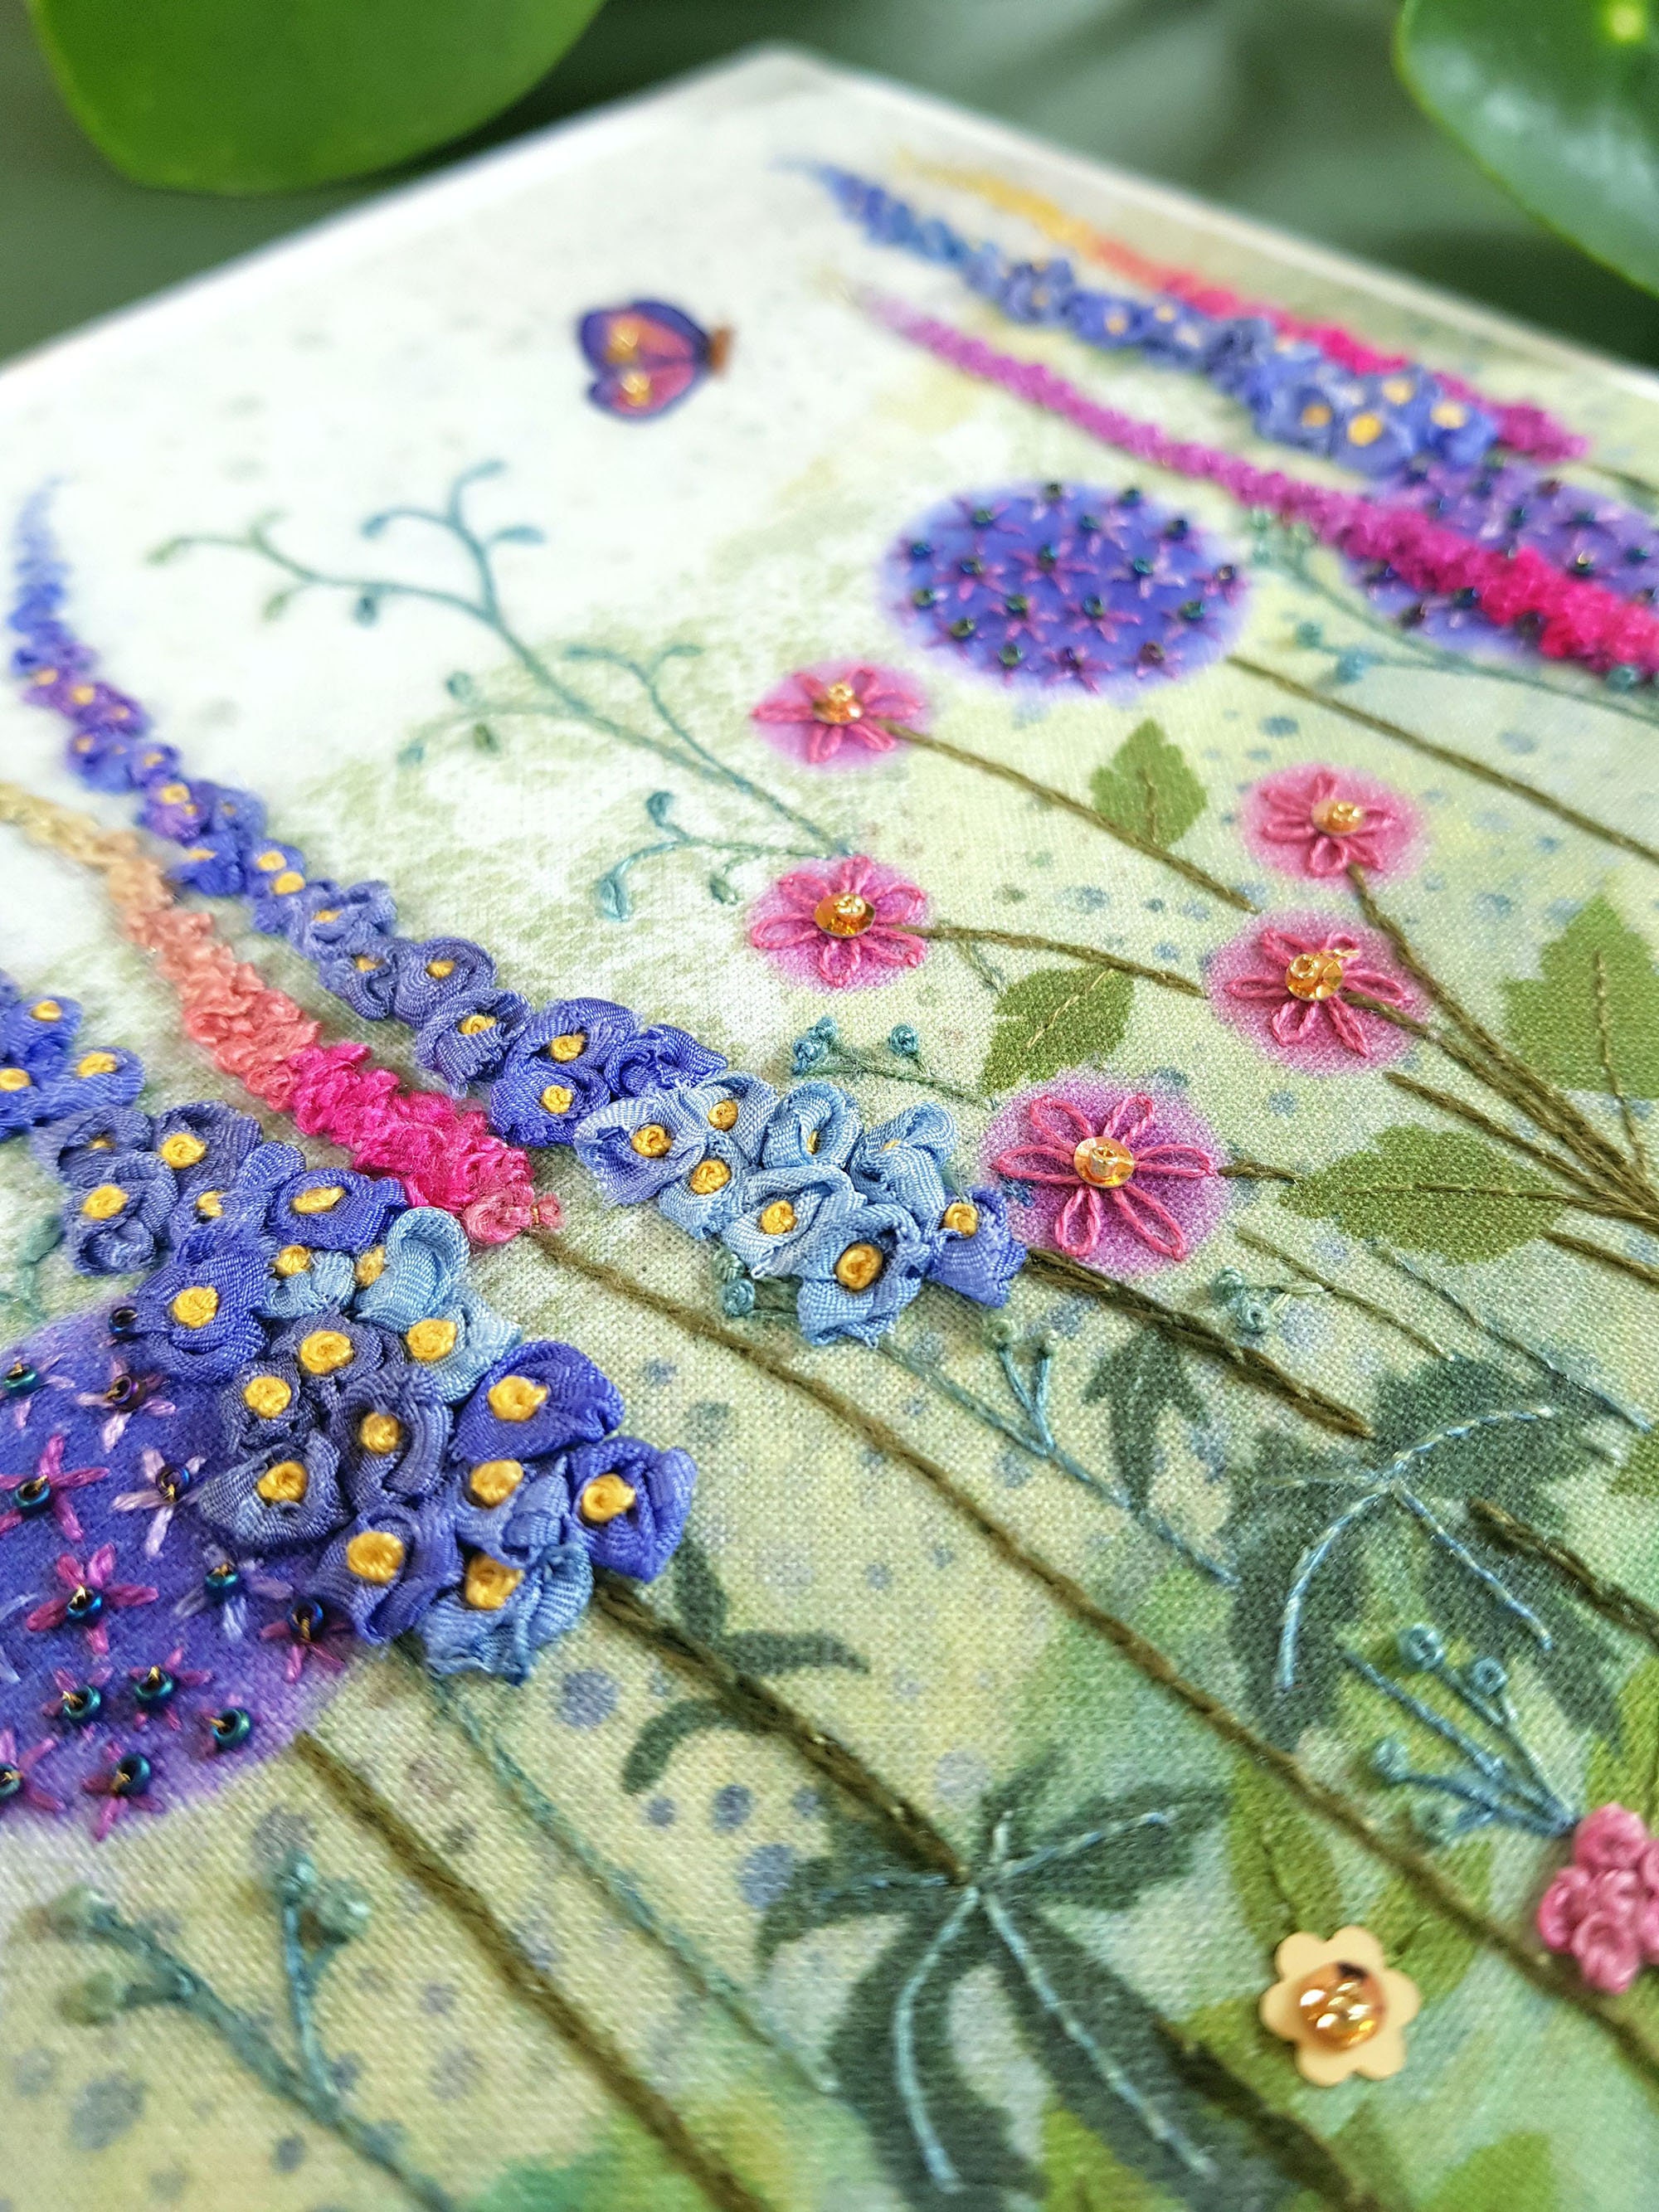 Family Flower Garden in Blue: Design Your Own Embroidery Kit